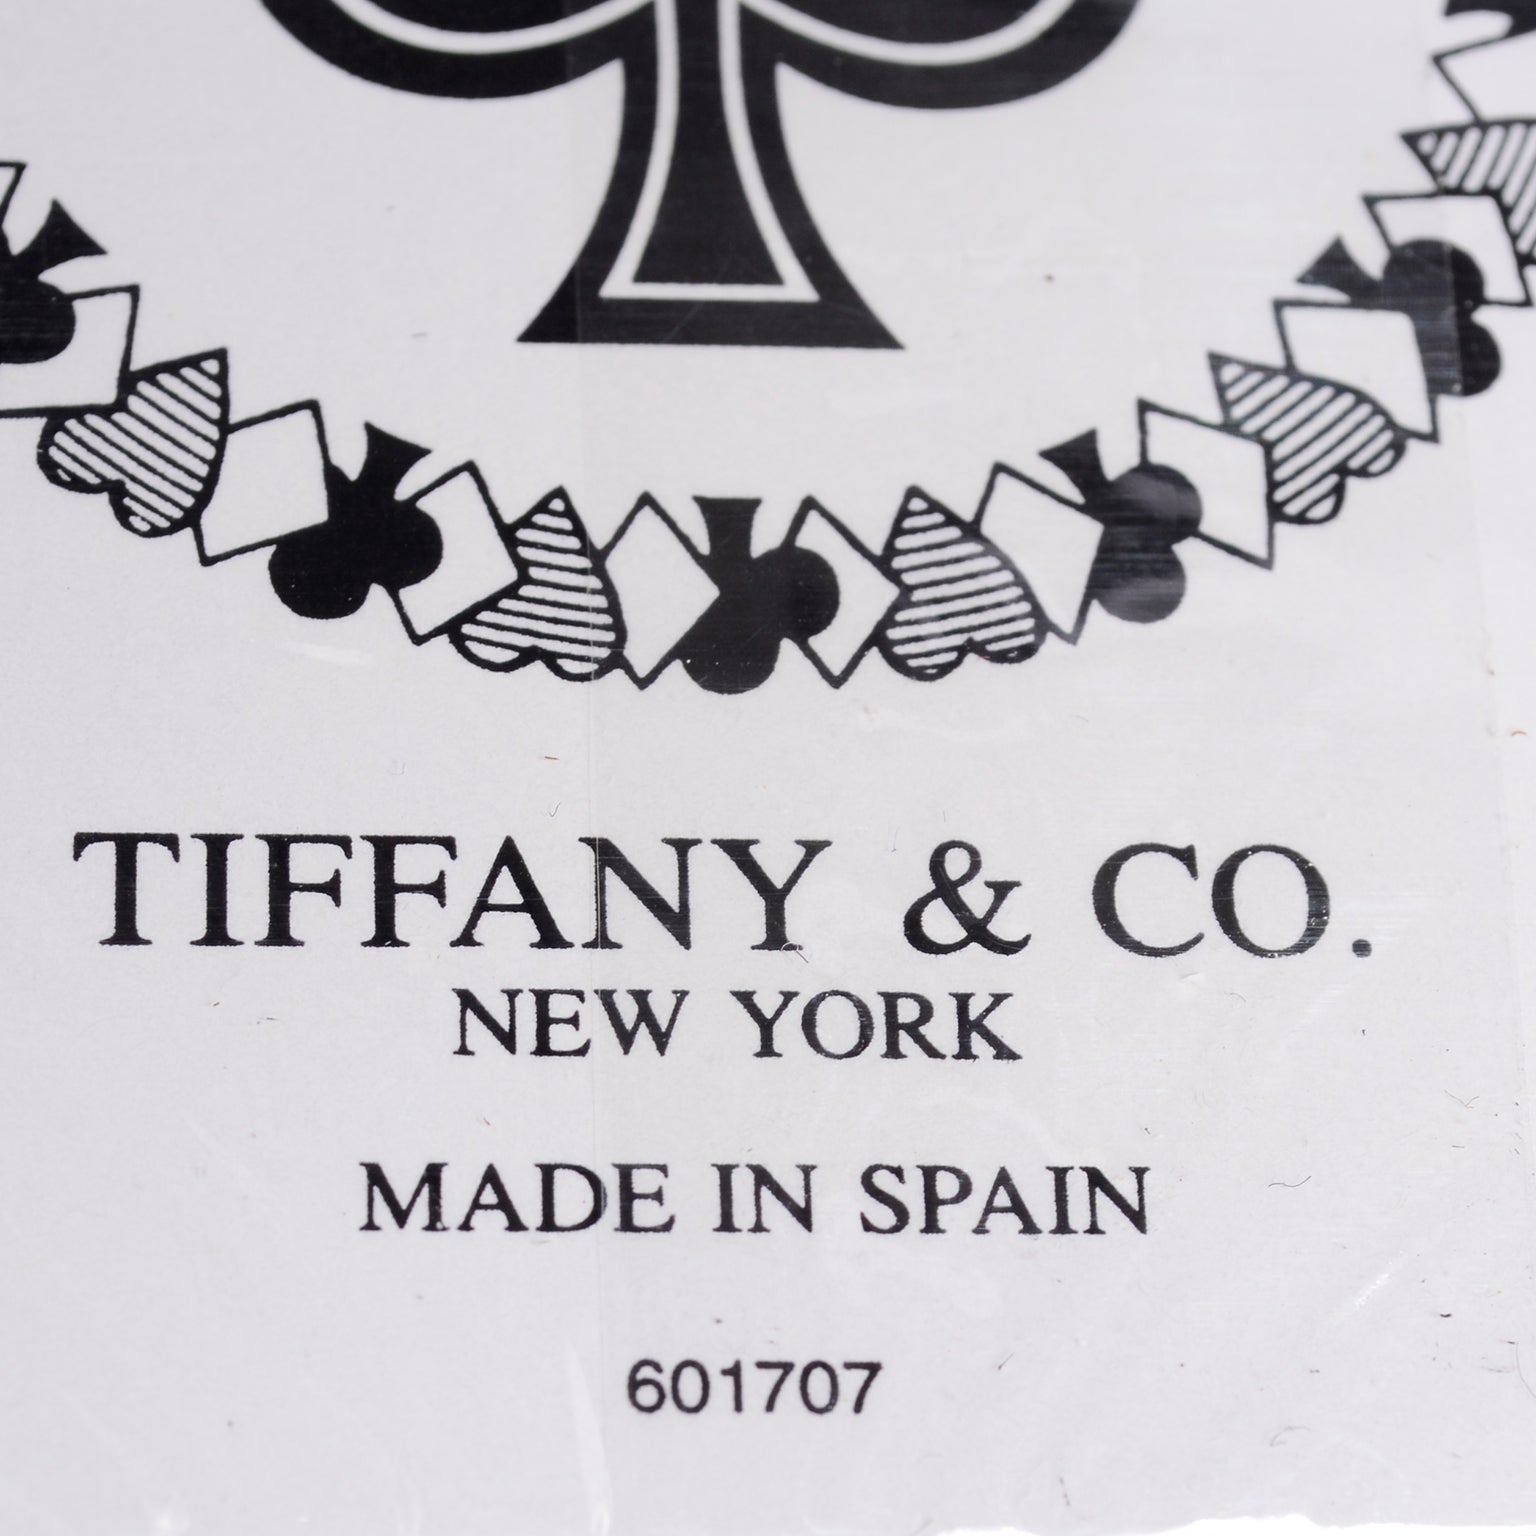 Tiffany Travel playing cards in a Tiffany Blue® box.